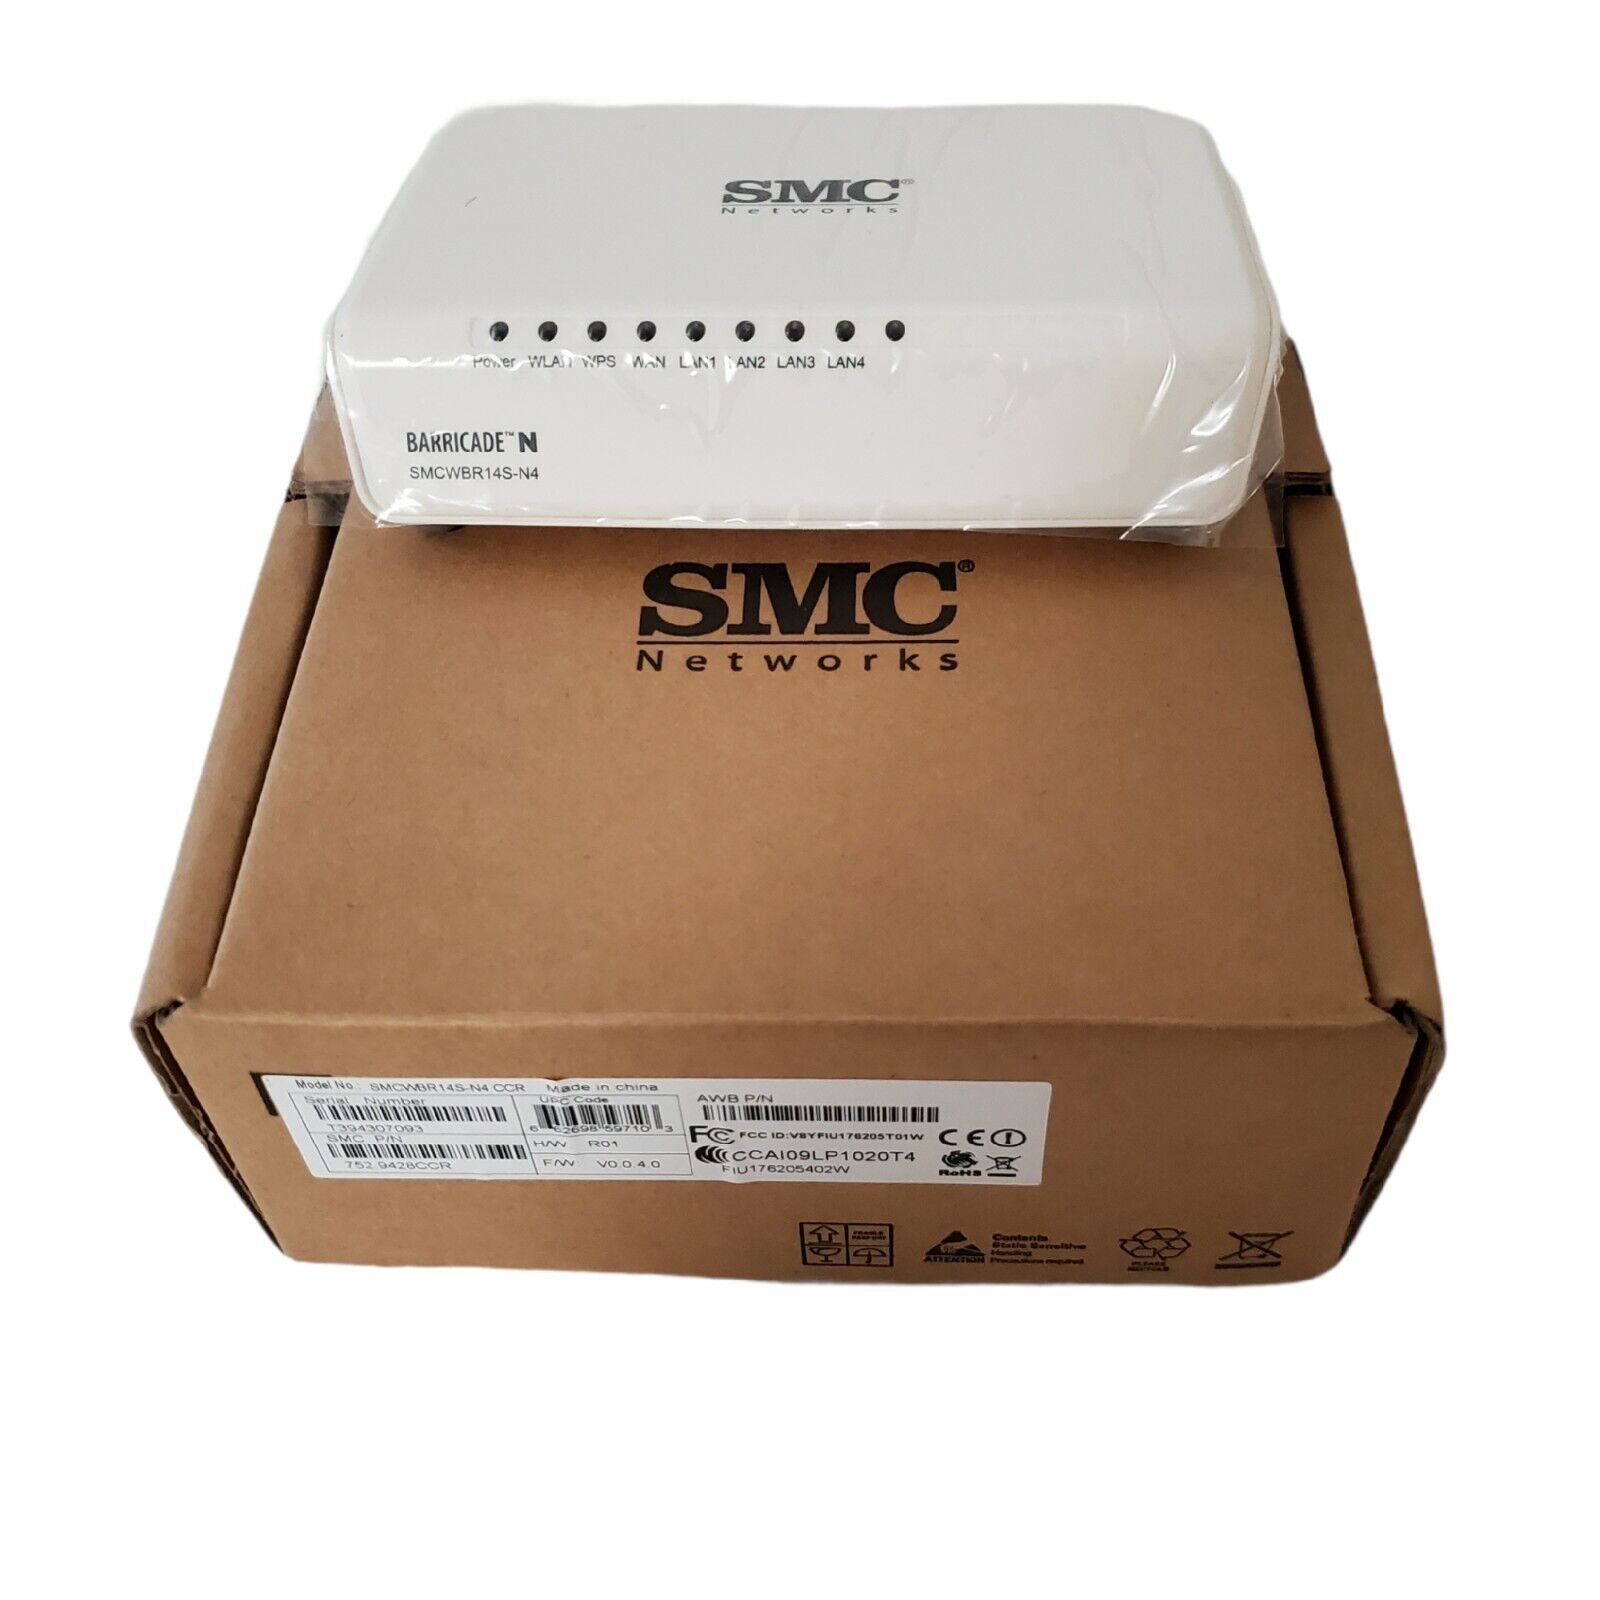 SMC Network 150 Mbps 4-Port Wireless Broadband Router SMCWBR14S-N4